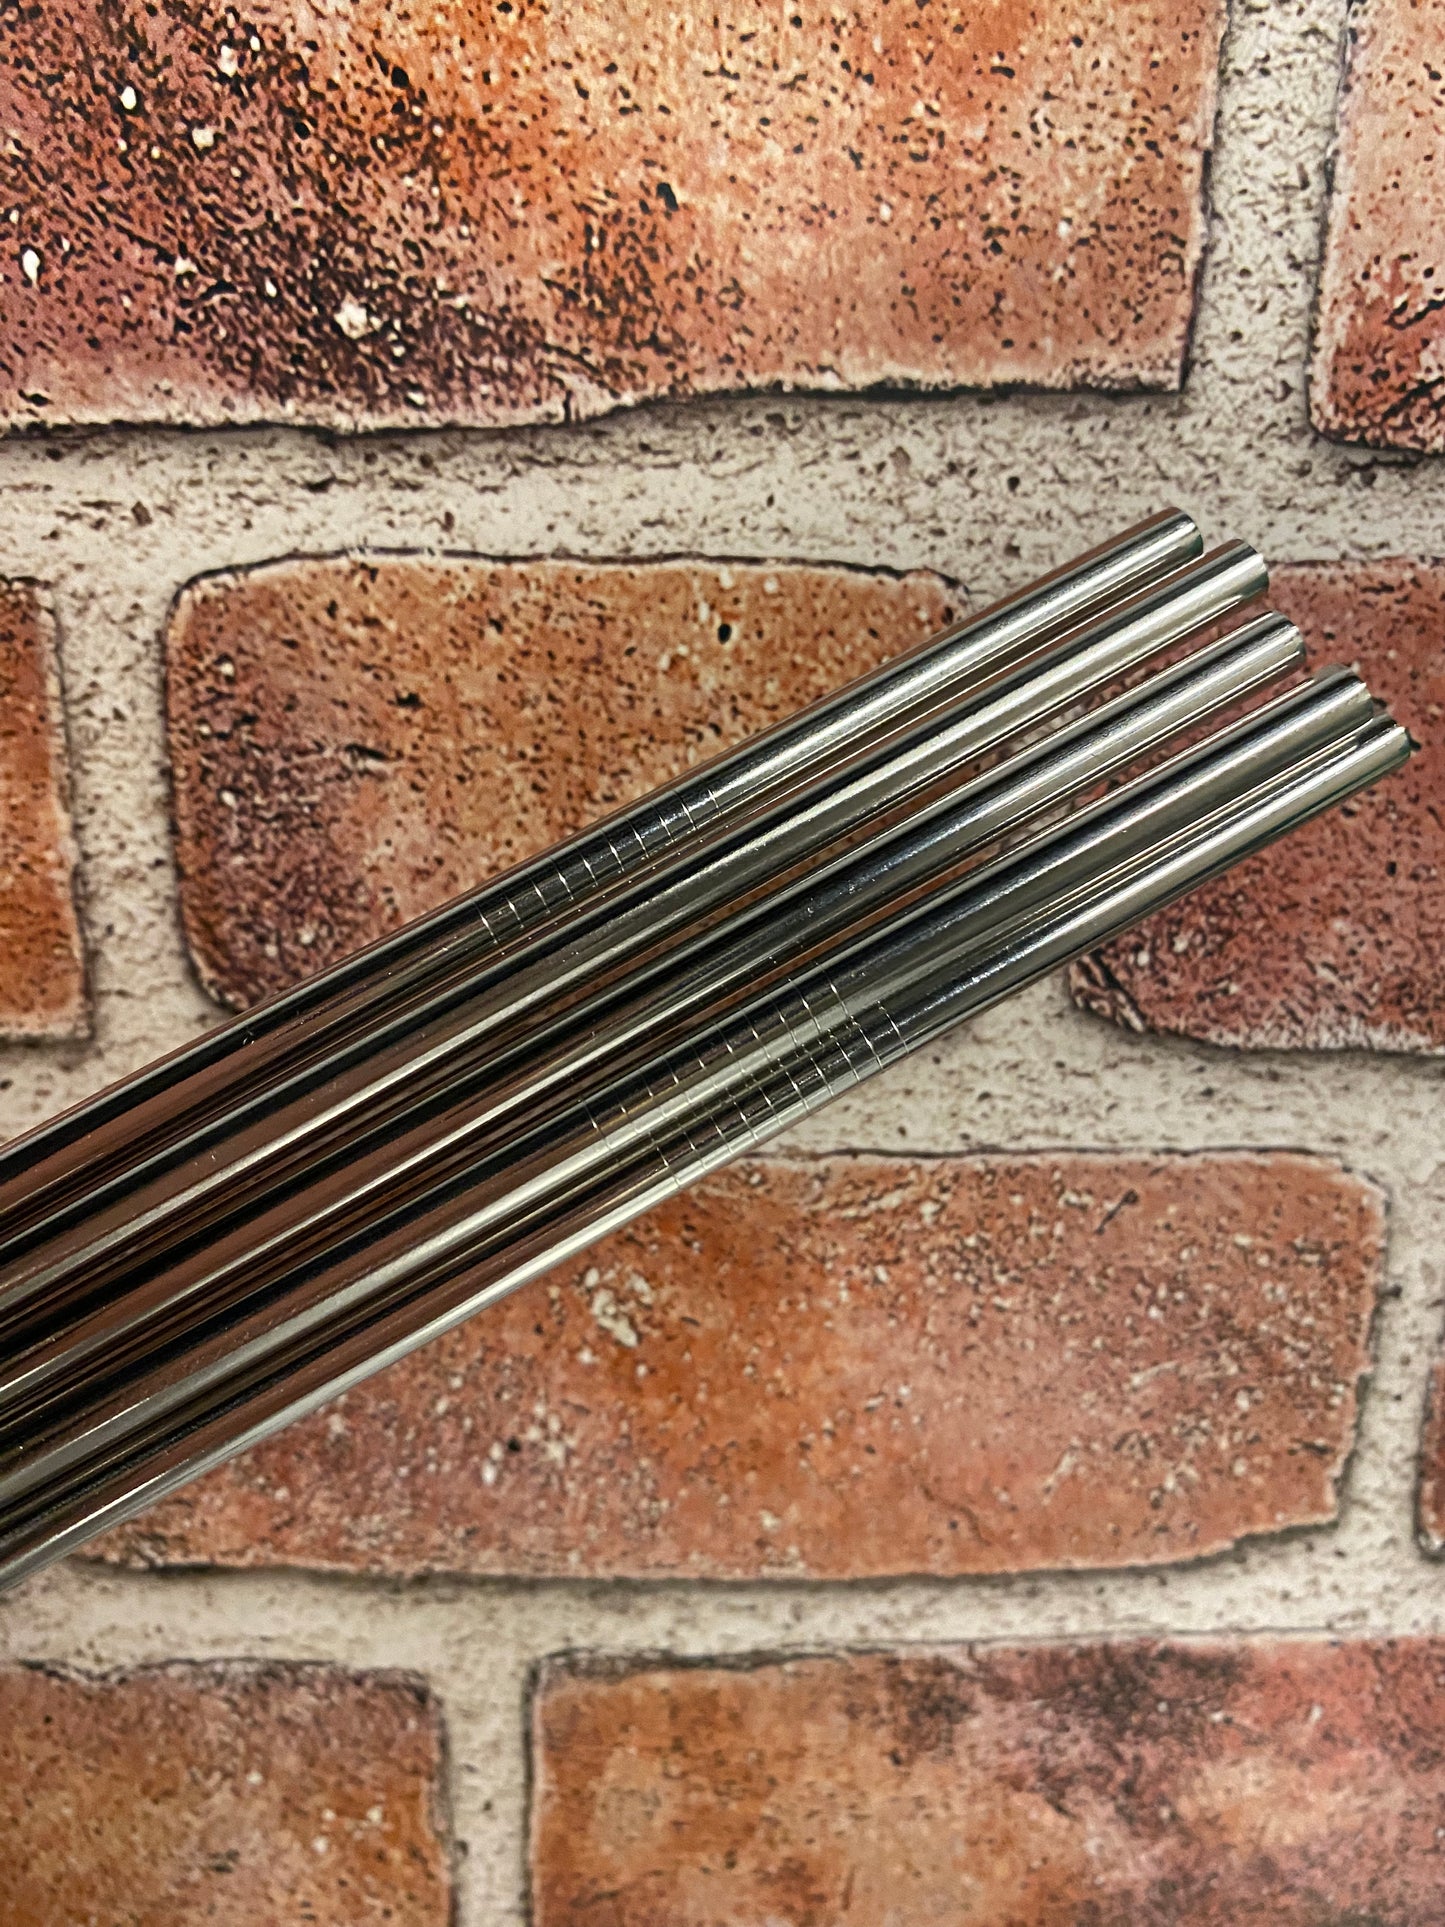 Reusable Stainless Steel Metal Straws